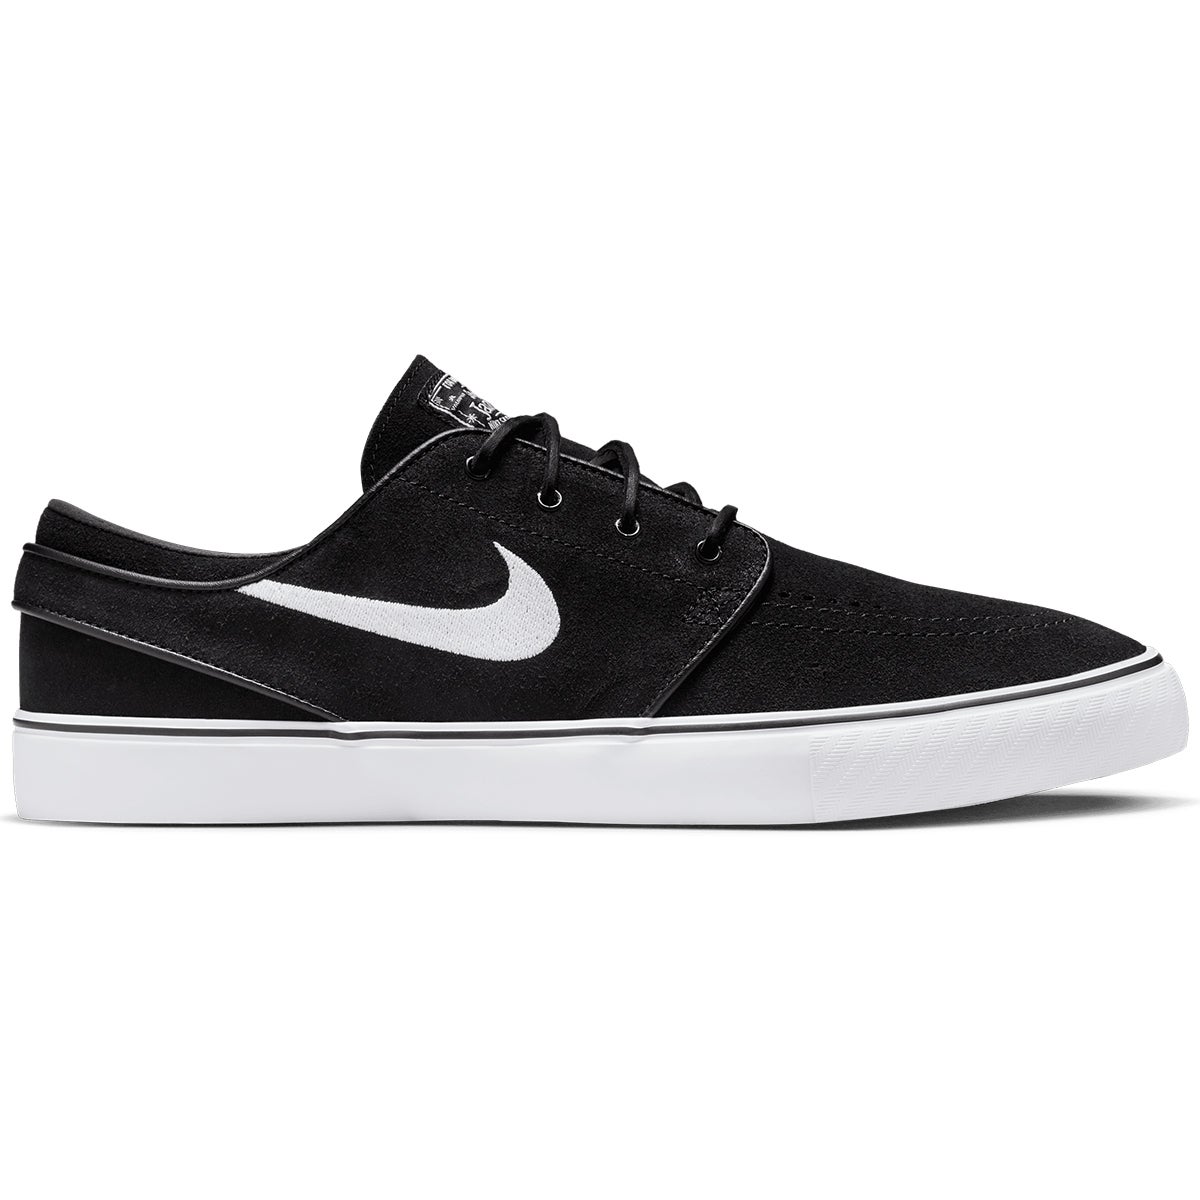 Nike SB Zoom Janoski OG+ Shoe in Black/White/Black/White | Boardertown